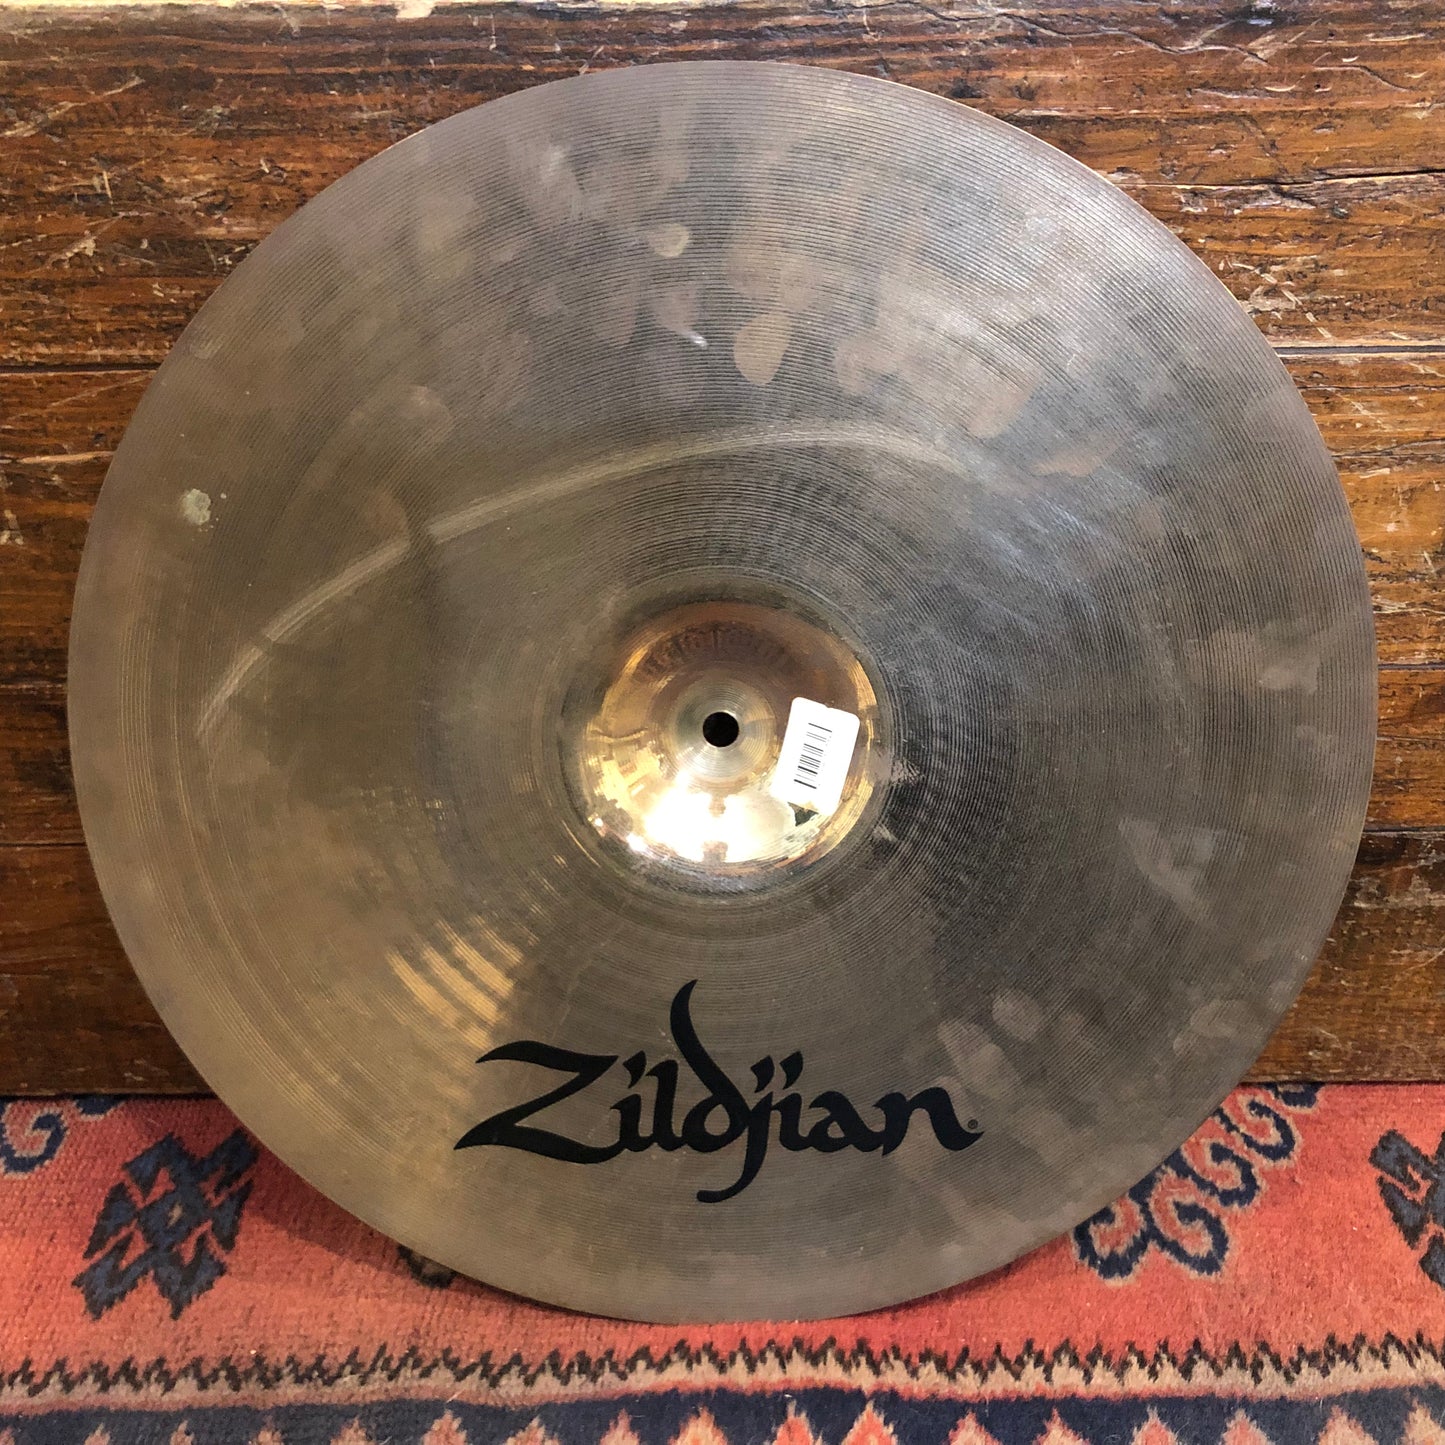 17" Zildjian A Custom Crash Cymbal Brilliant 1152g